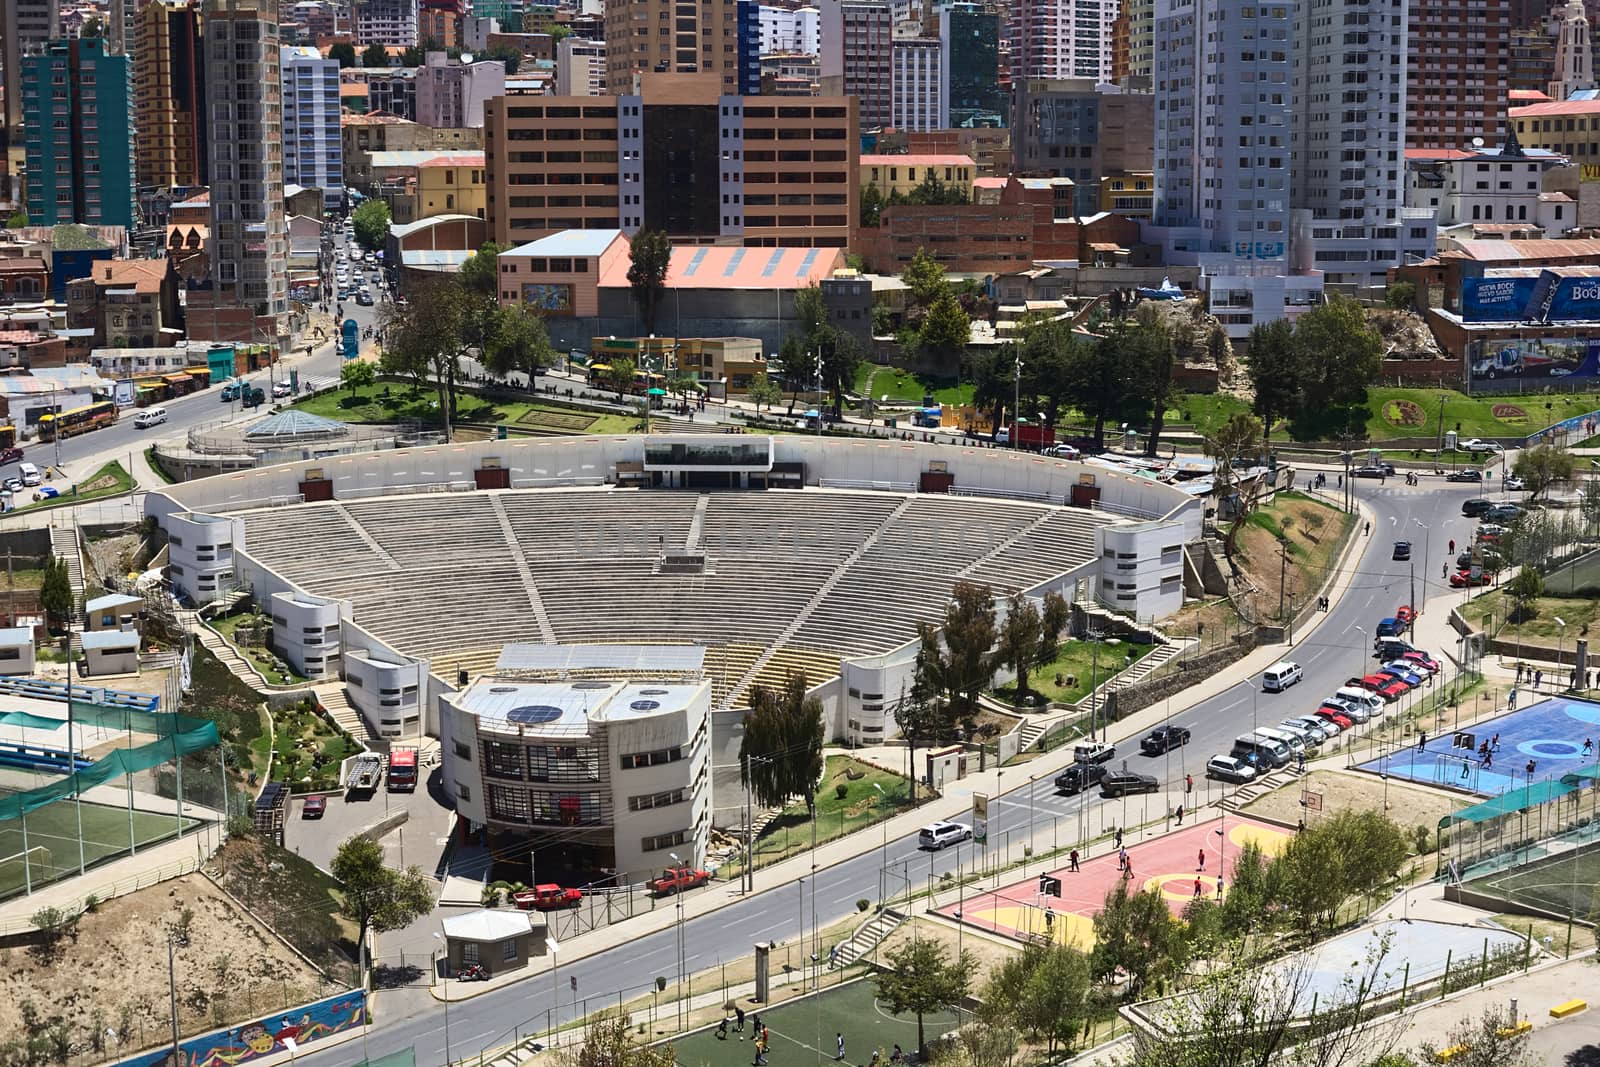 LA PAZ, BOLIVIA - OCTOBER 14, 2014: Open air theater next to the Parque Urbano Central (Central Urban Park) along Avenida del Poeta on October 14, 2014 in La Paz, Bolivia  